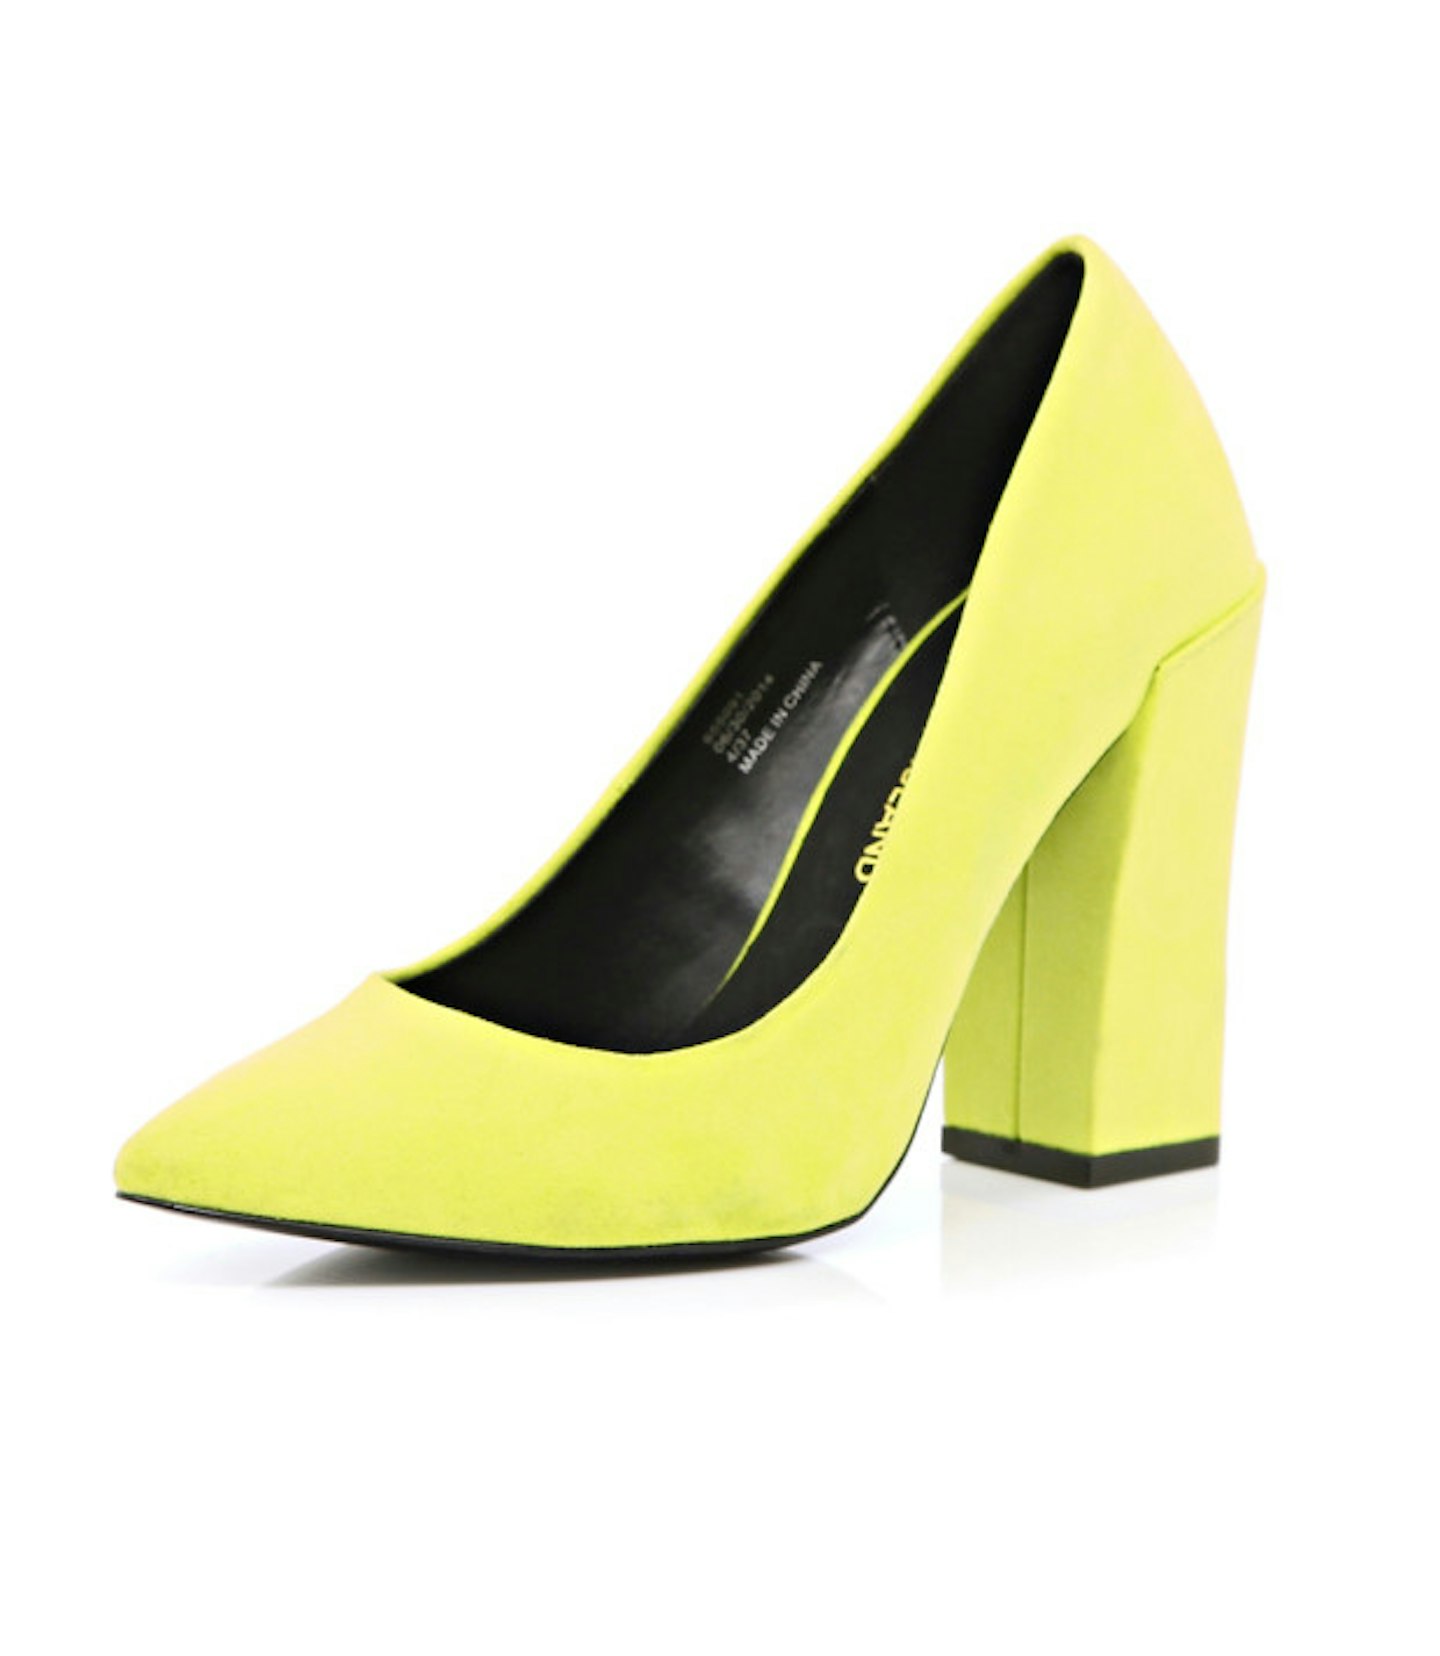 six-o-clock-shoes-yellow-river-island-heels